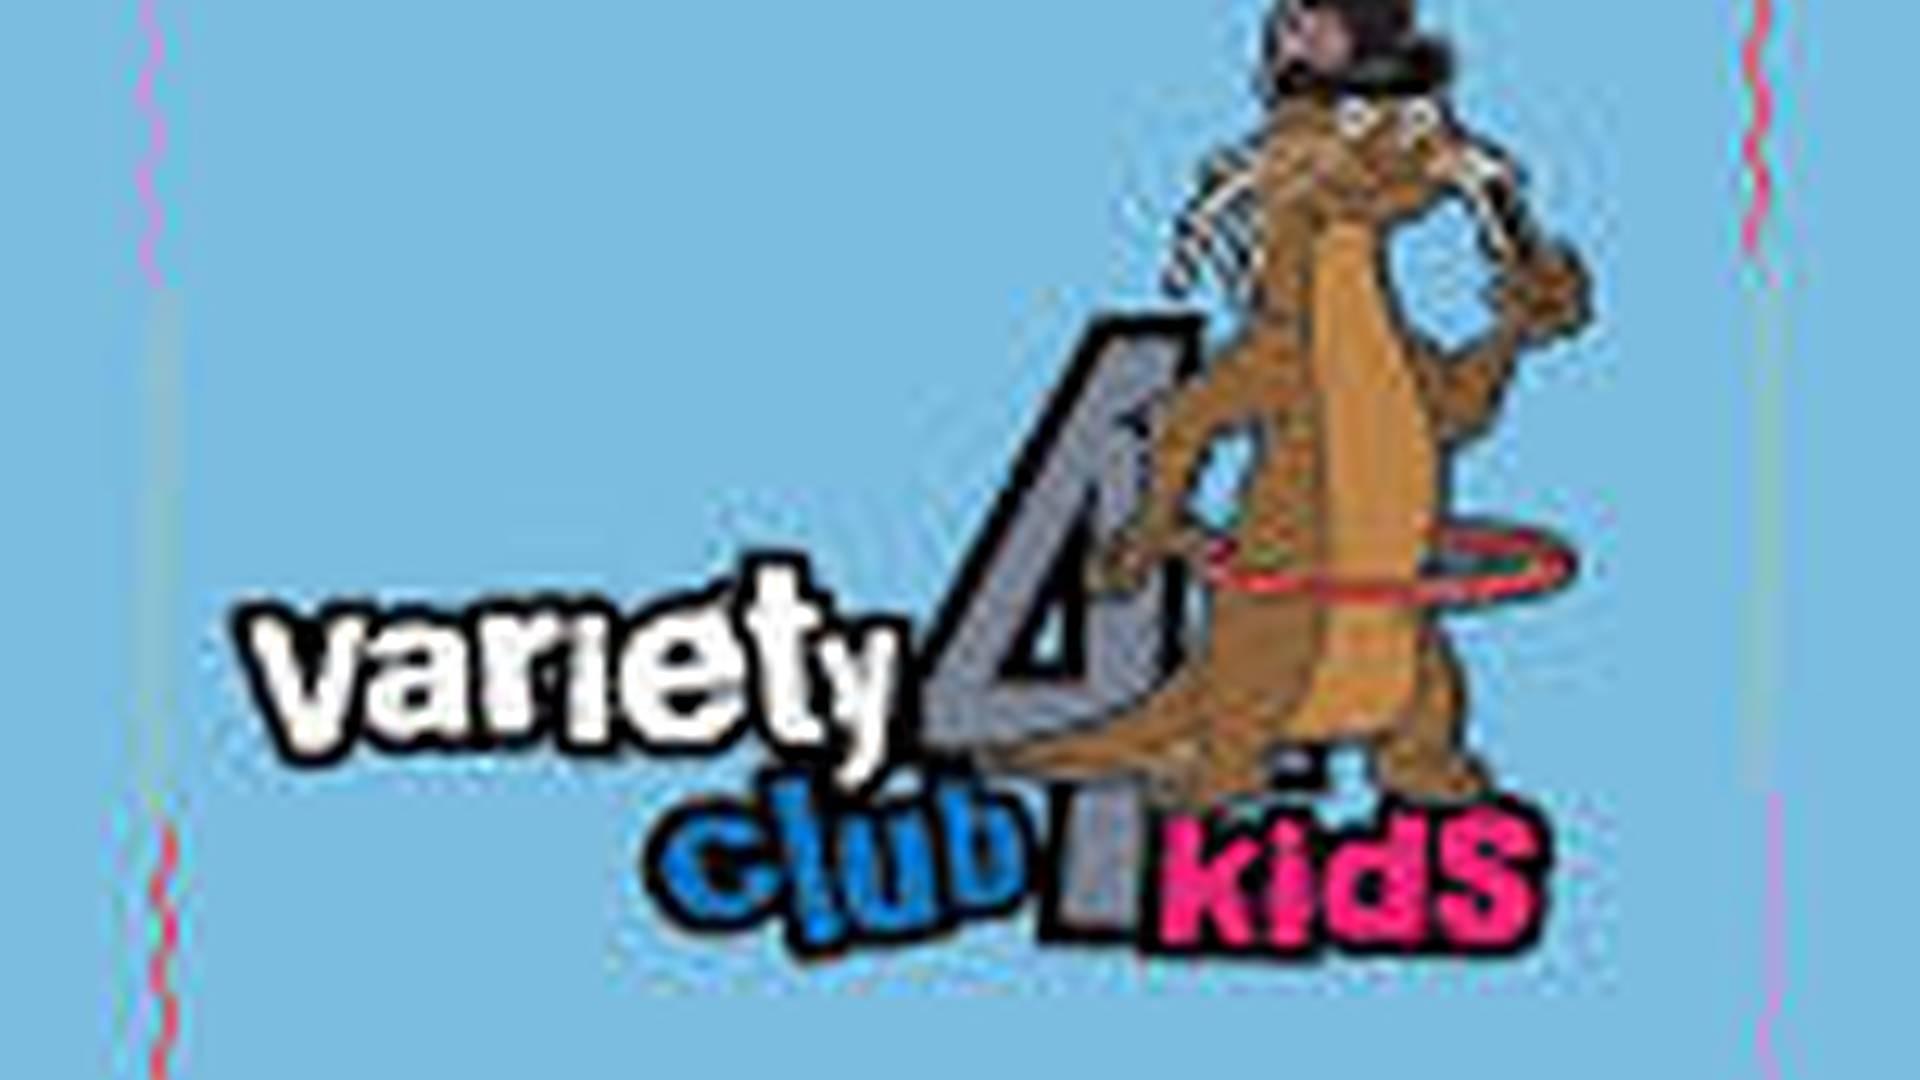 Variety Club 4 Kids photo